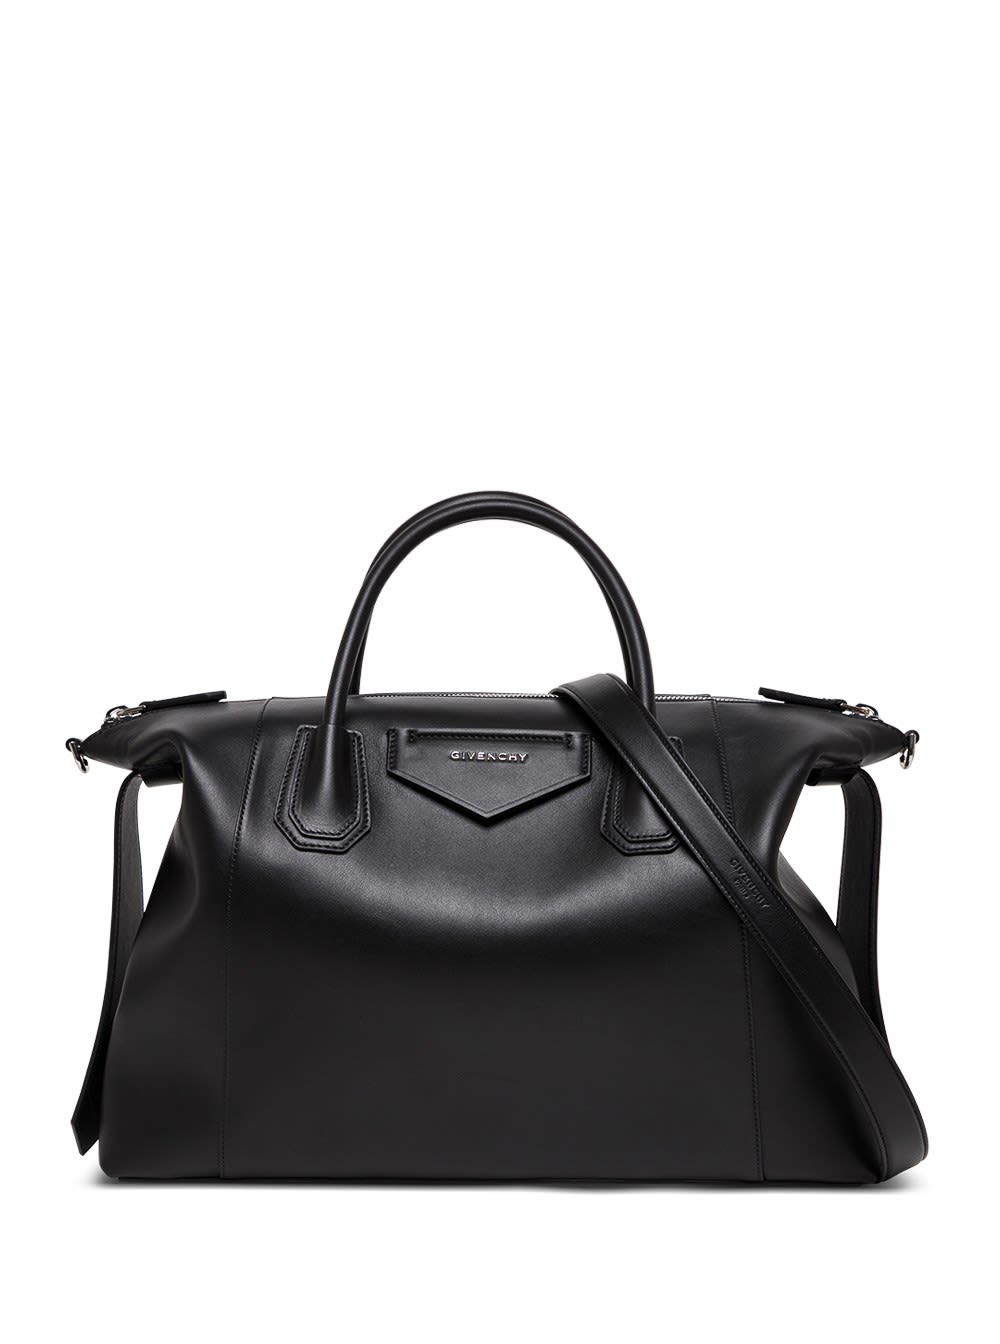 Givenchy Antigona Soft Medium Handbag In Black Leather